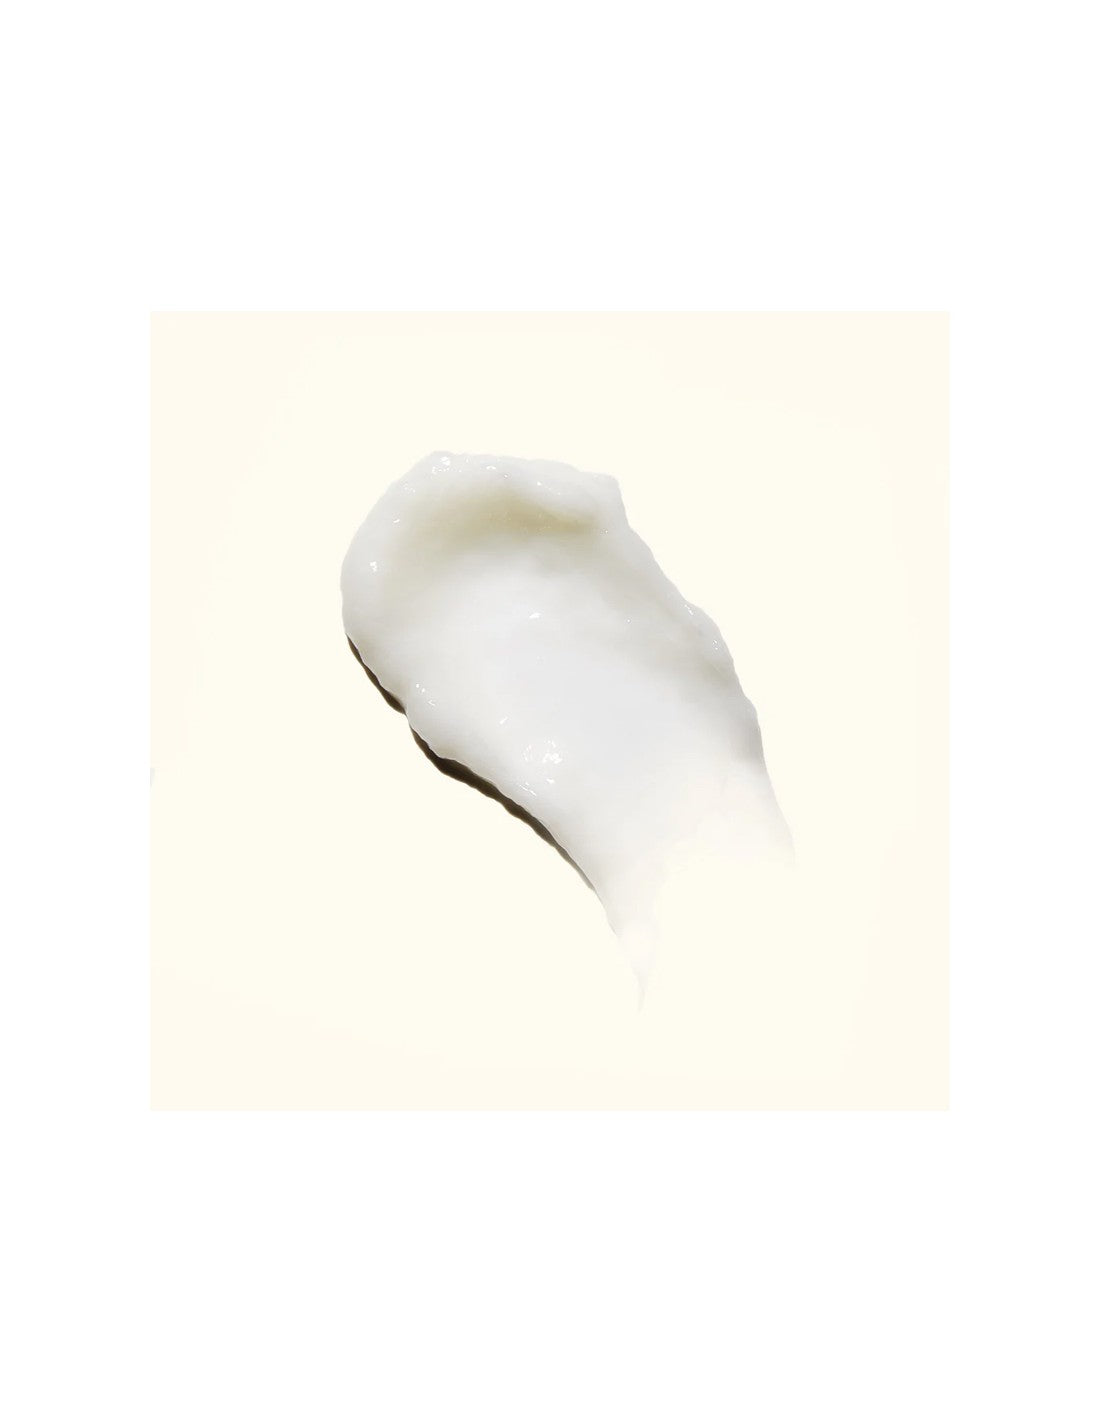 Amika - Curl Corps - Defining Cream |6.7 oz|